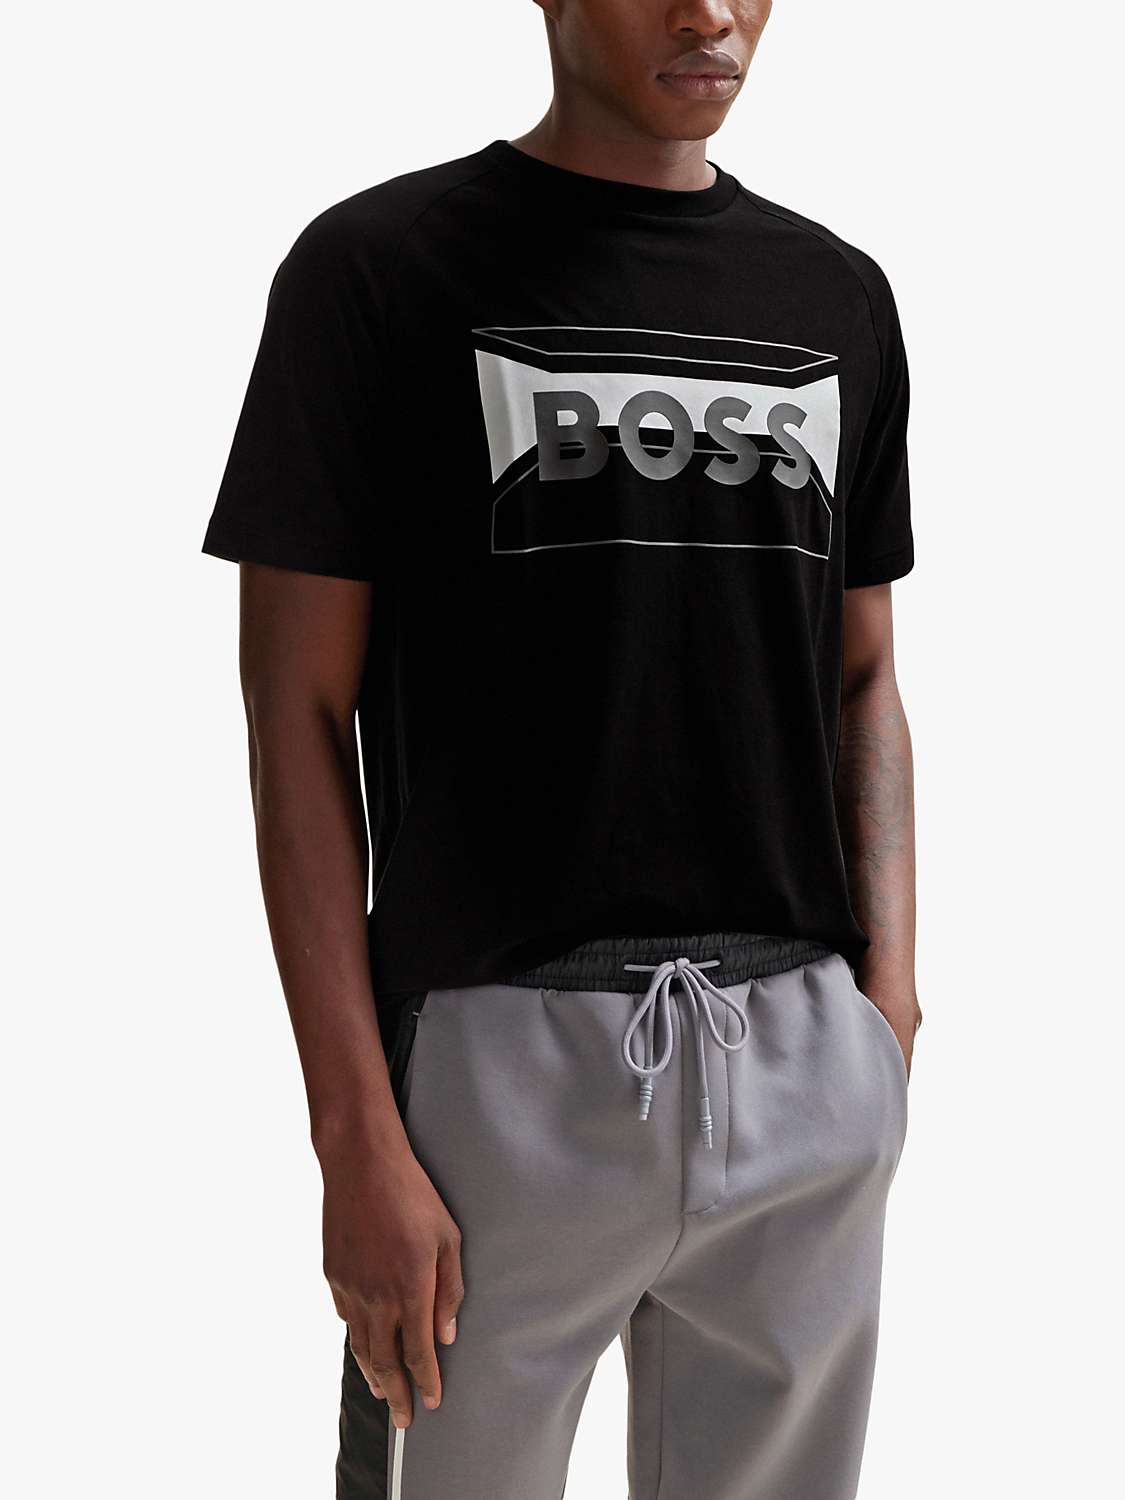 Buy BOSS Tee 2 Short Sleeve T-Shirt, Black Online at johnlewis.com